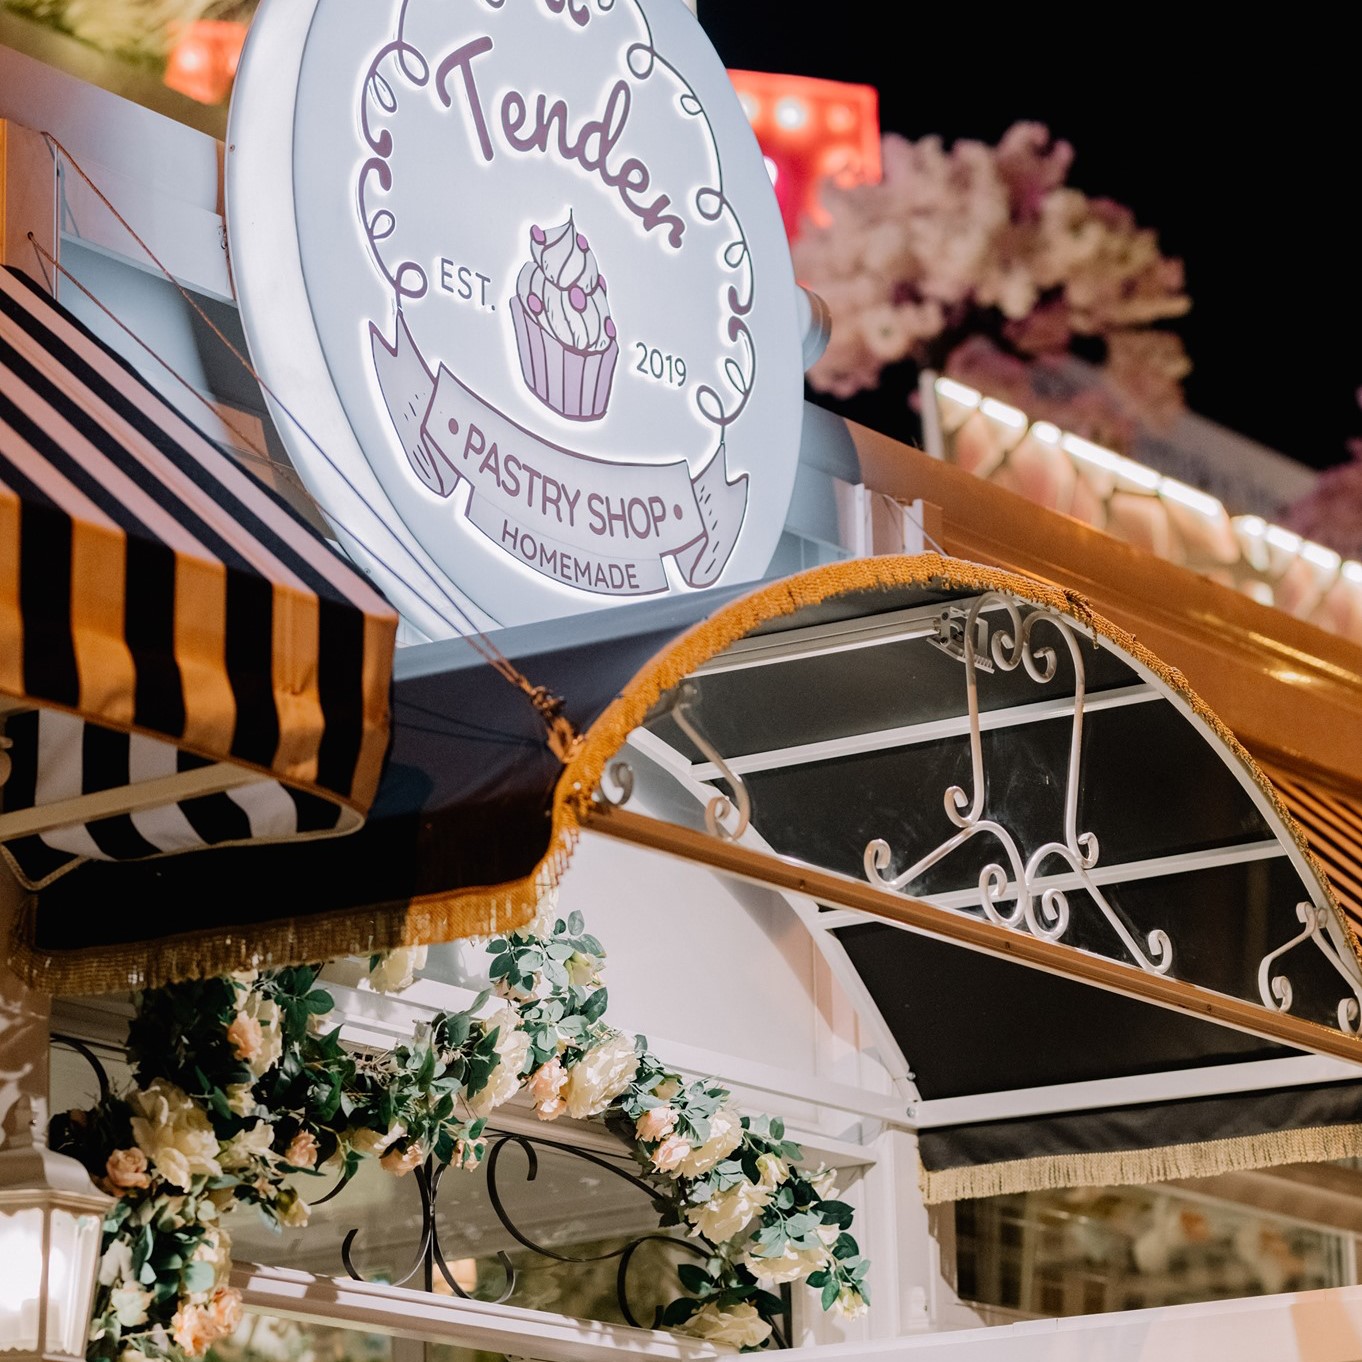 Tender Pastry Shop: Η πιο γλυκιά αλχημεία της Θεσσαλονίκης